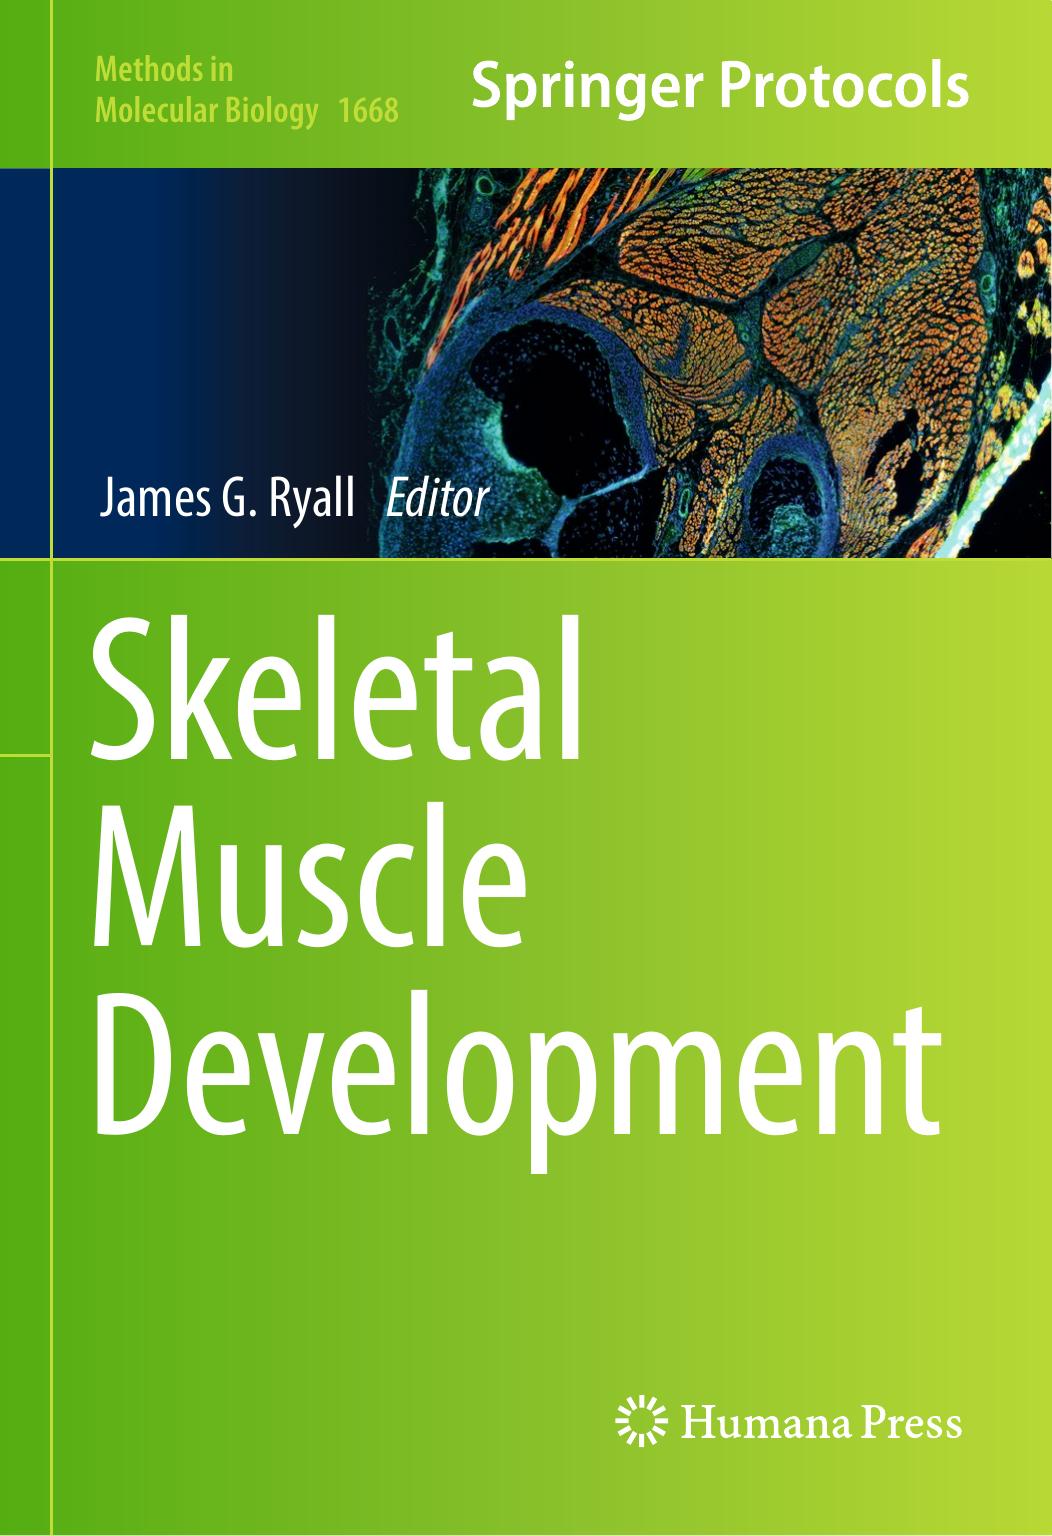 Skeletal muscle development-Humana Press (2017)